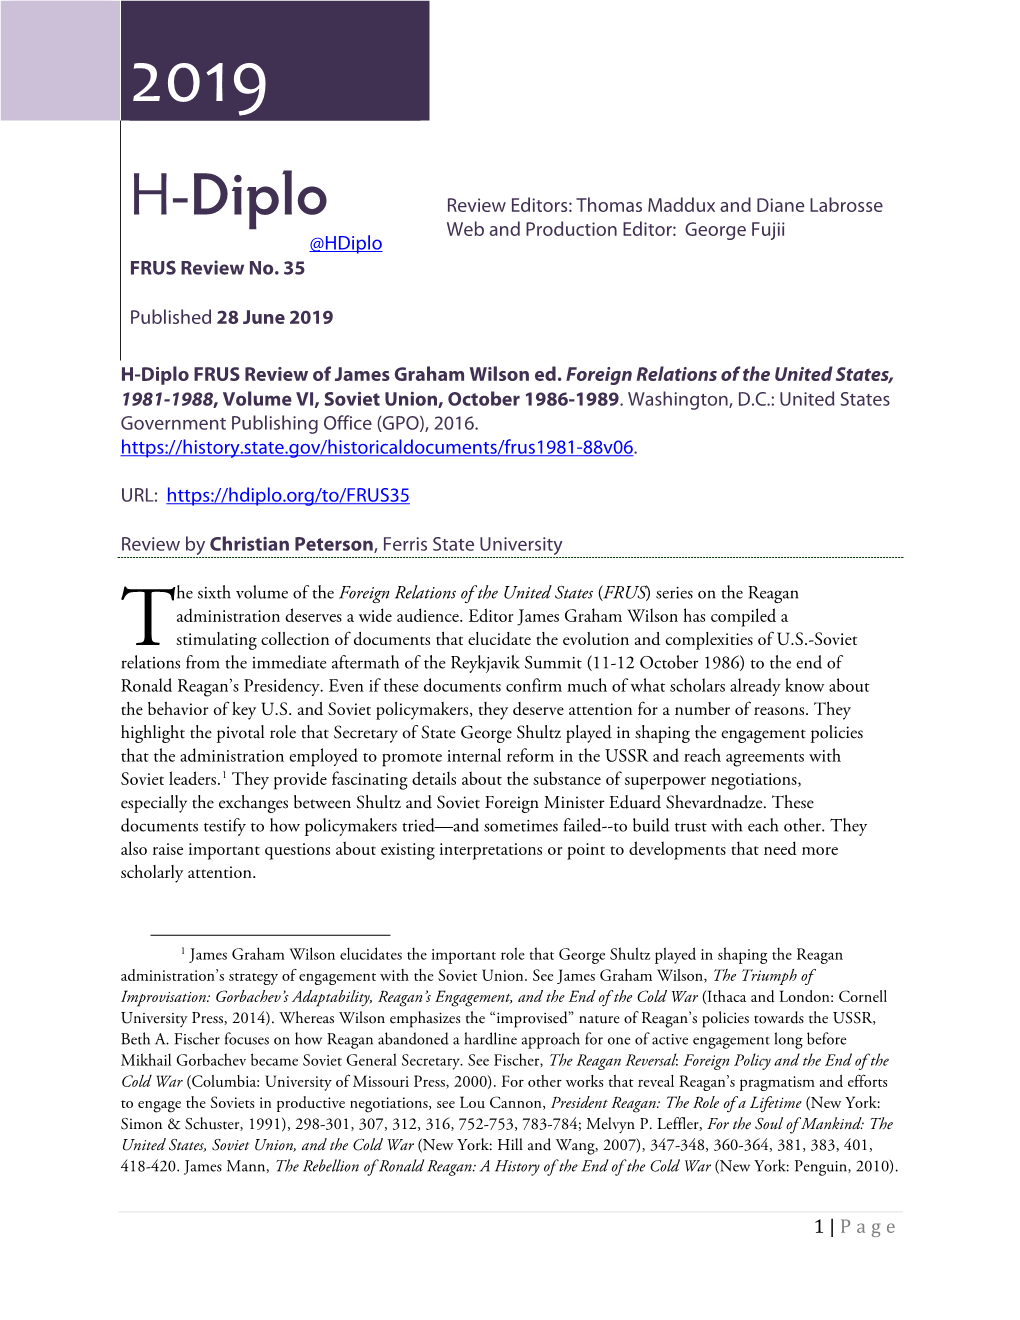 H-Diplo FRUS Review No. 34